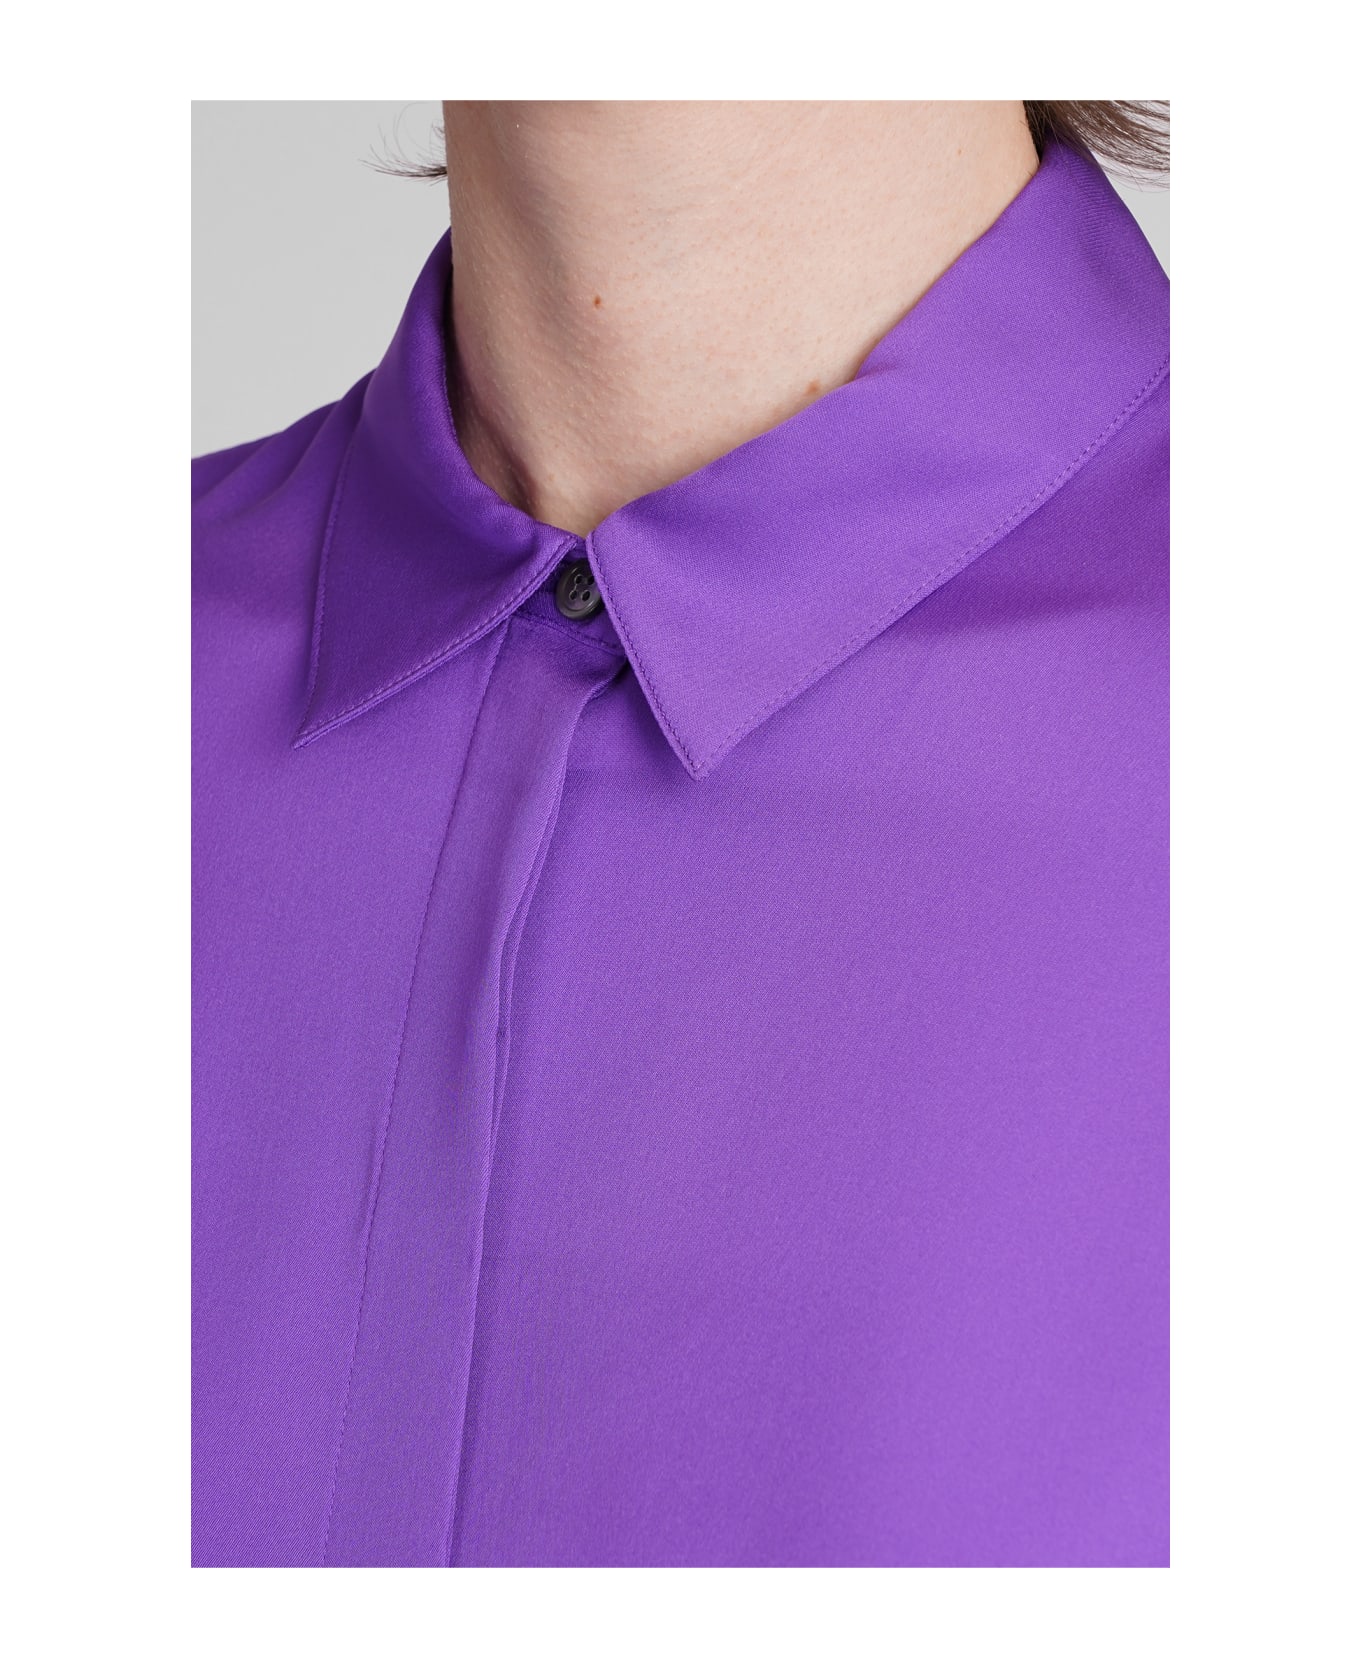 Theory Shirt In Viola Silk - Viola